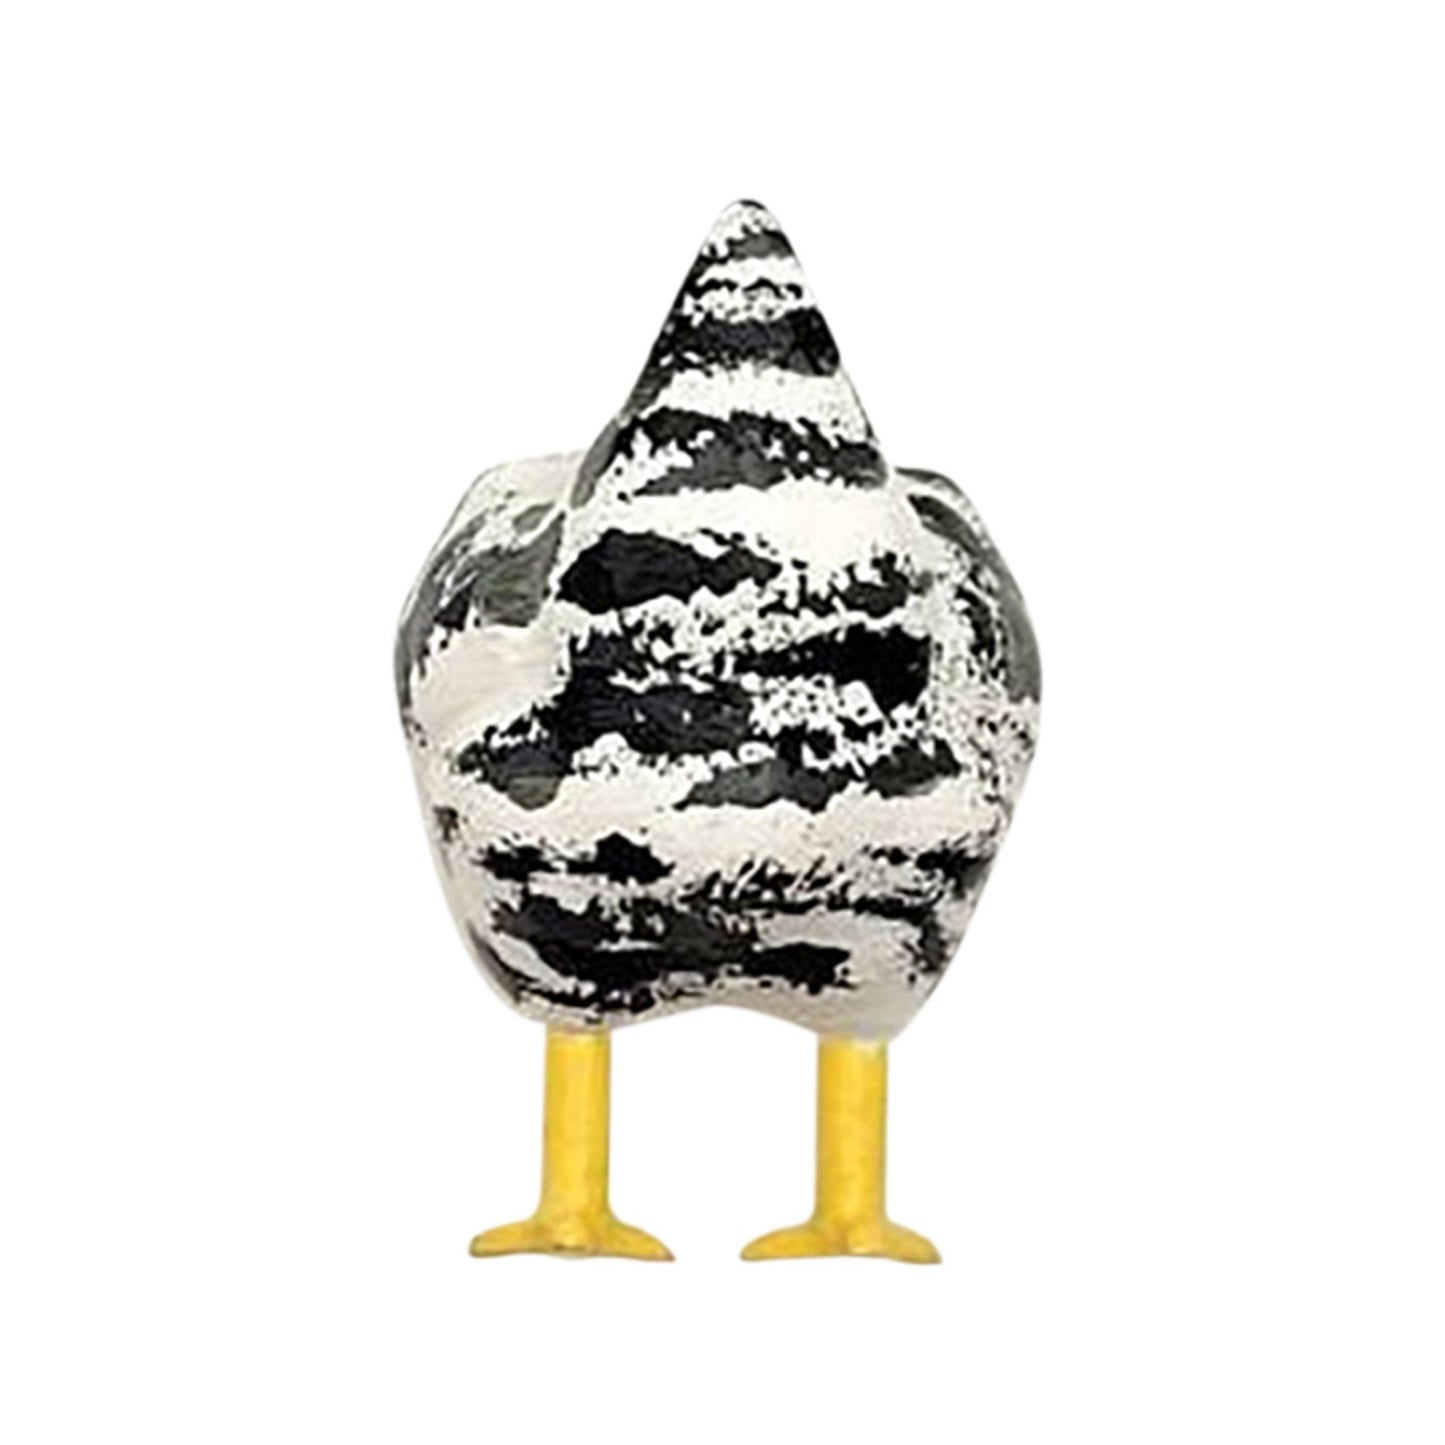 Chicken butt magnets - funny chicken gift - chicken home decor - farmer gift - white